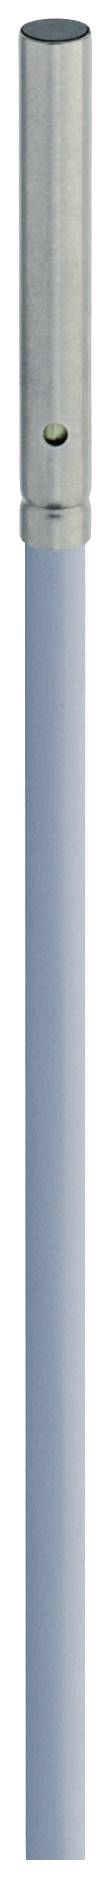 CONTRINEX Induktiver Näherungsschalter 3 mm bündig PNP DW-AD-603-03 (320 920 036)